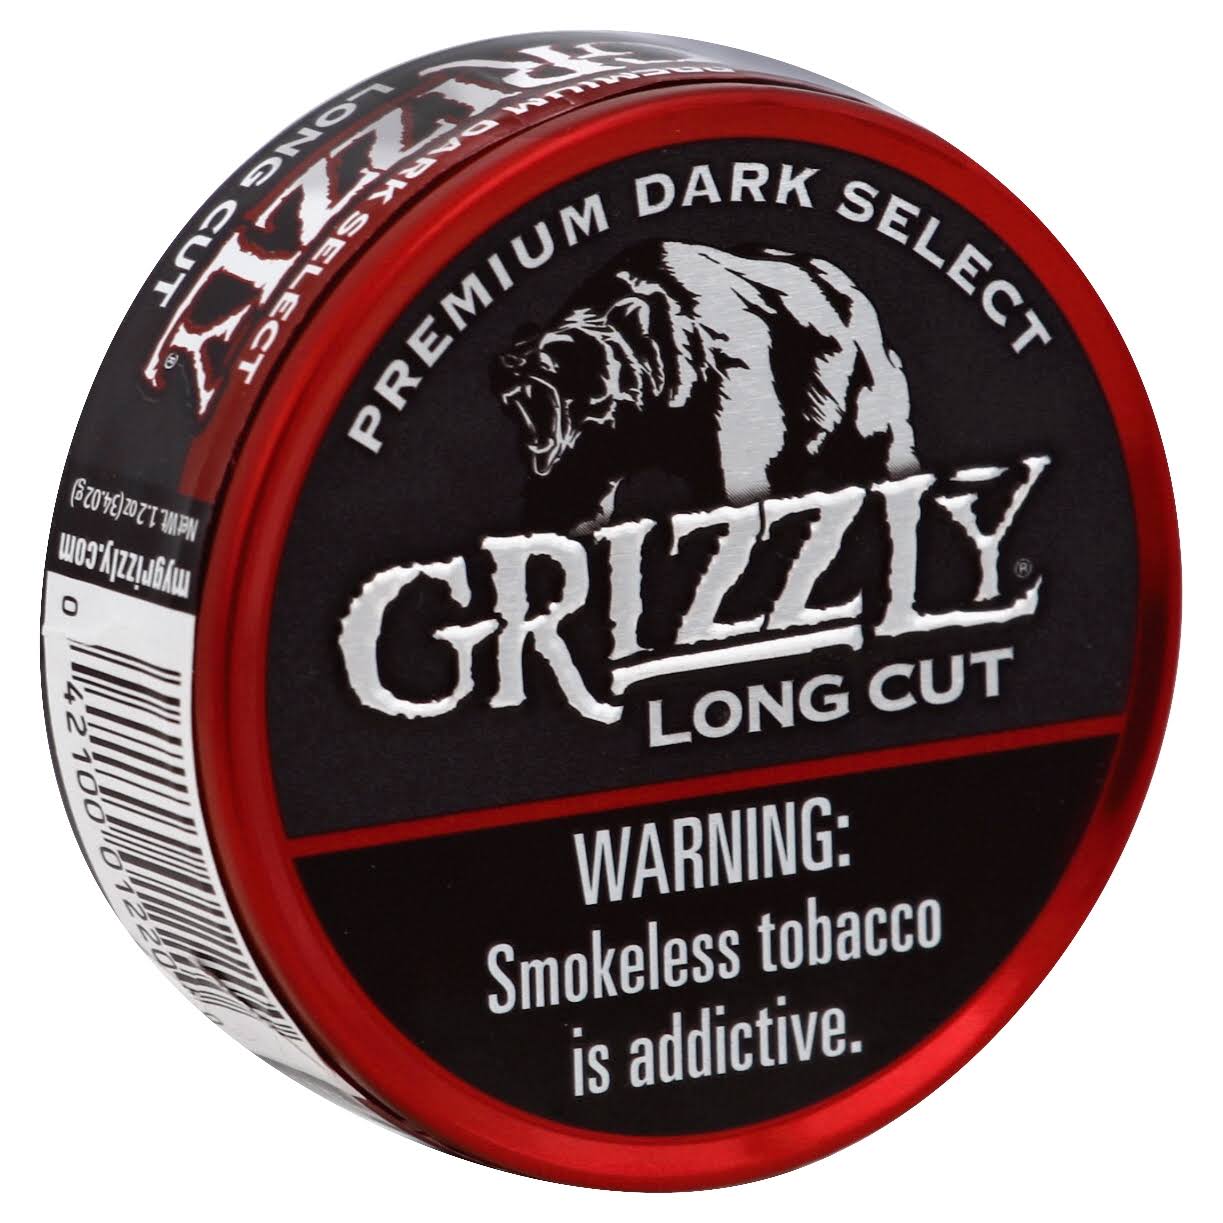 Grizzly Moist Snuff, Long Cut - 1.2 oz